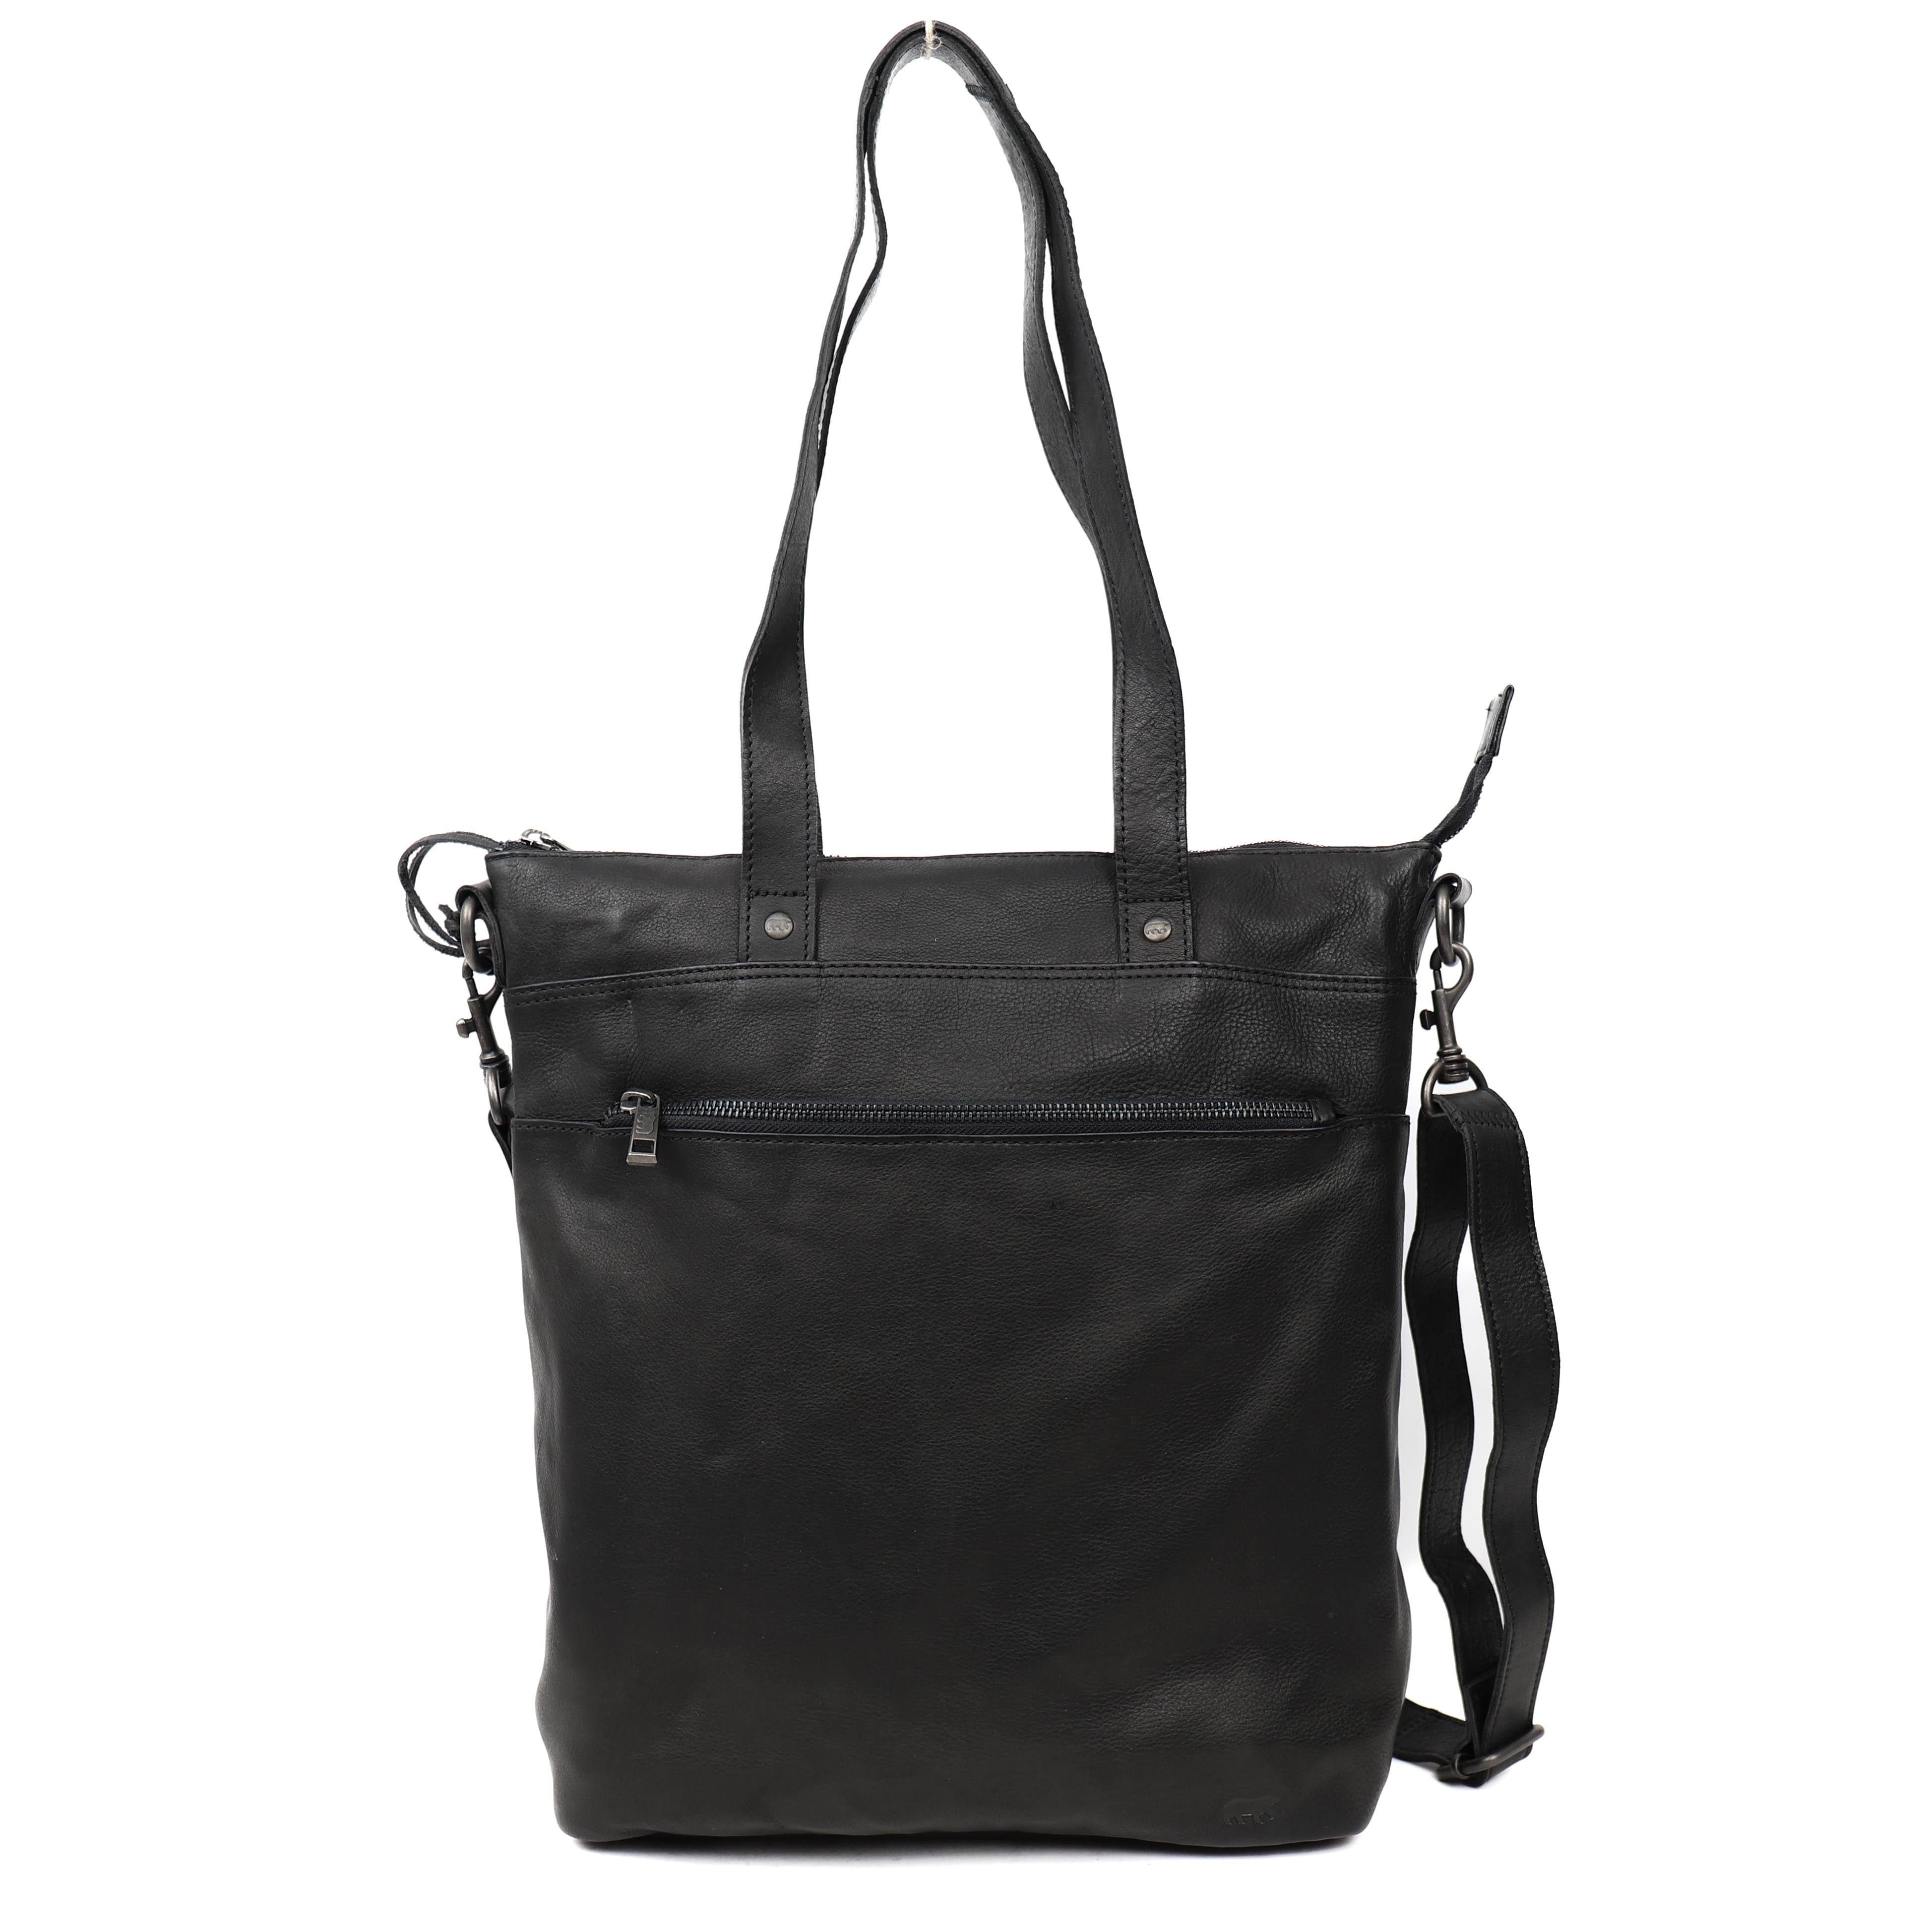 Hand/shoulder bag 'Loesie' black